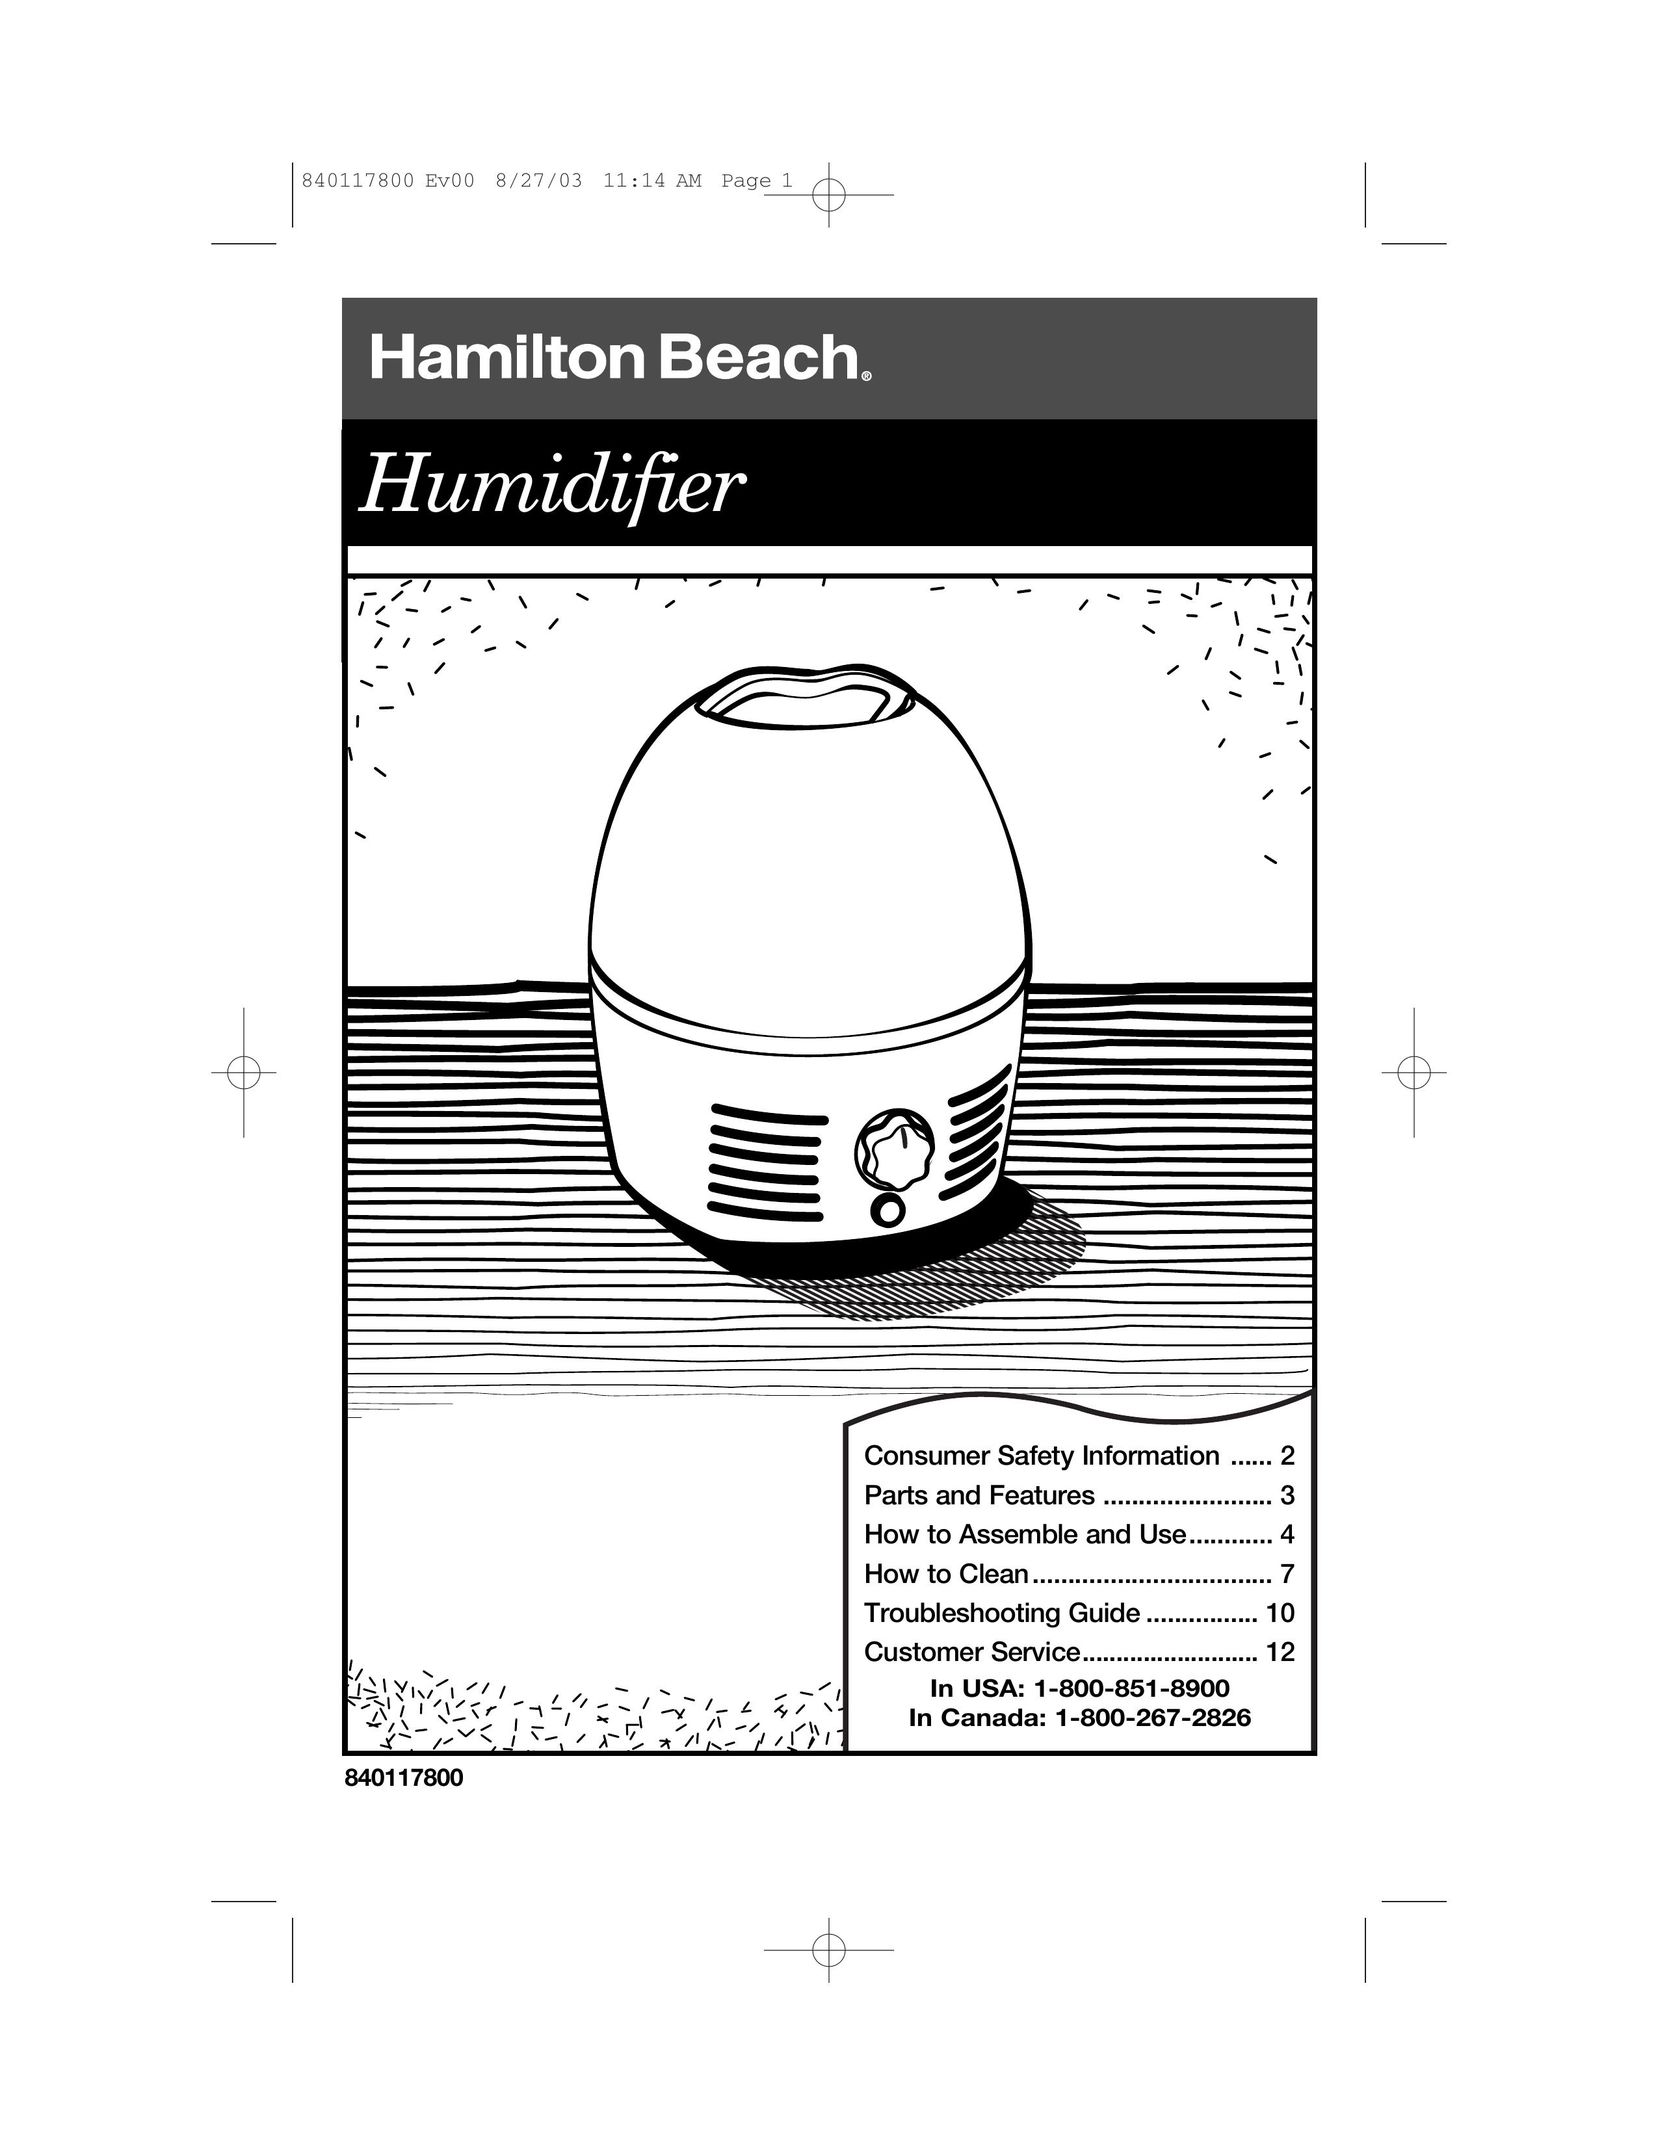 Hamilton Beach 840117800 Humidifier User Manual